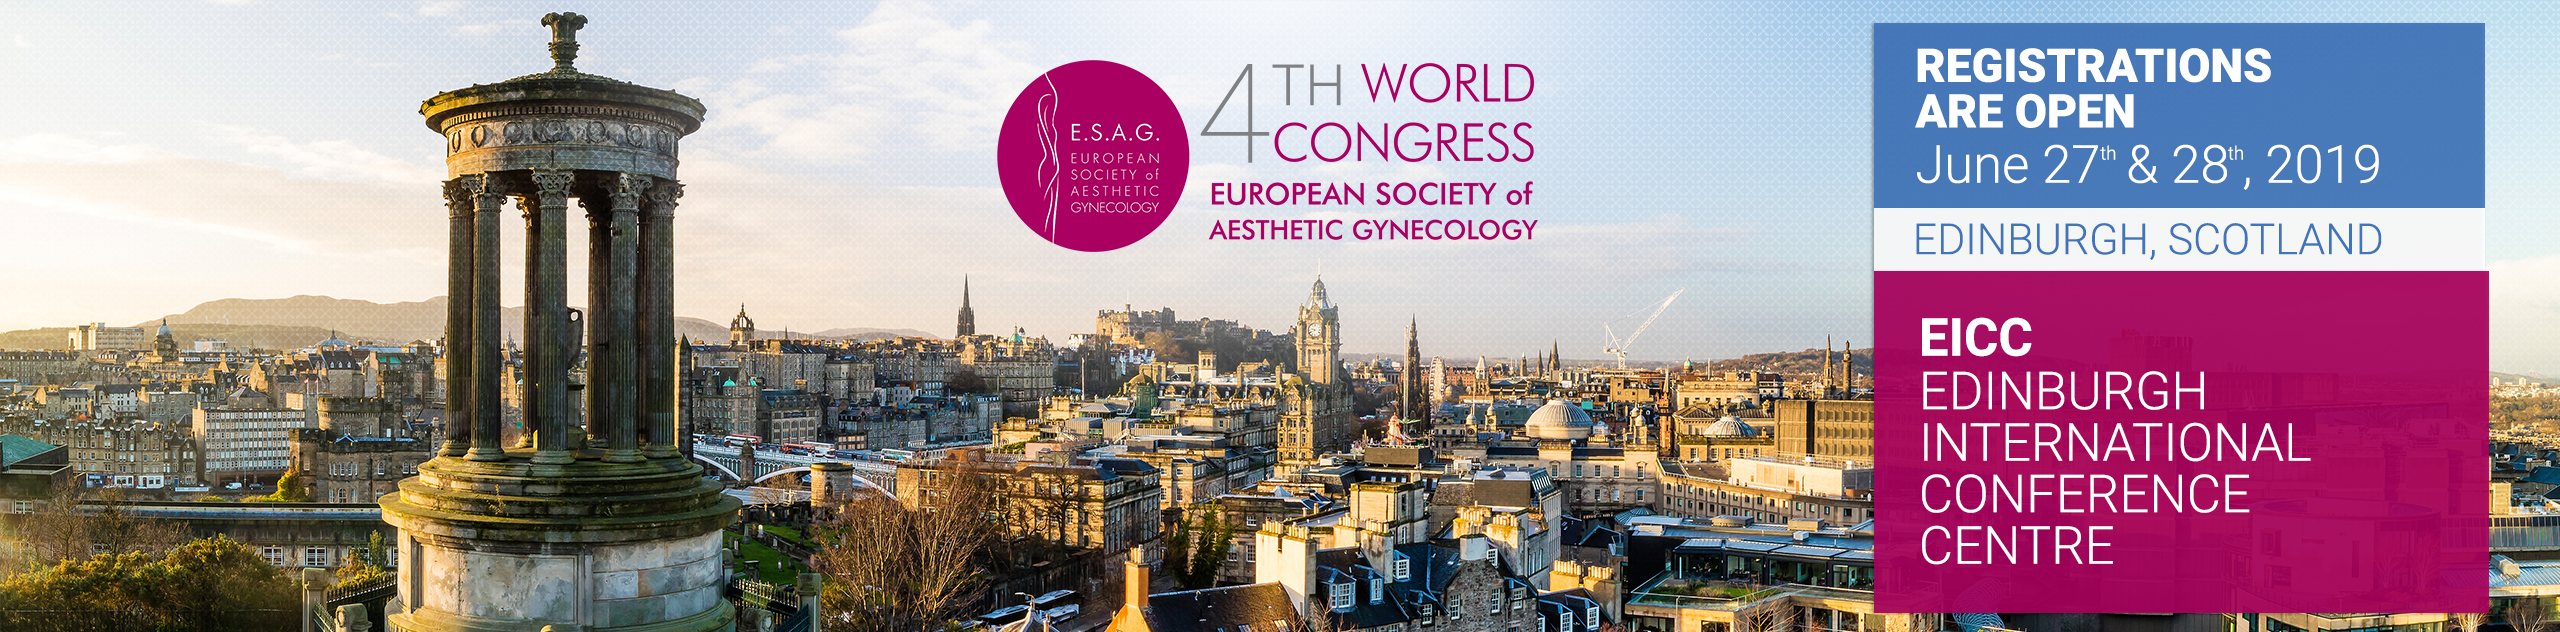 European Society of Aesthetic Gynecology congress (ESAG) 2019